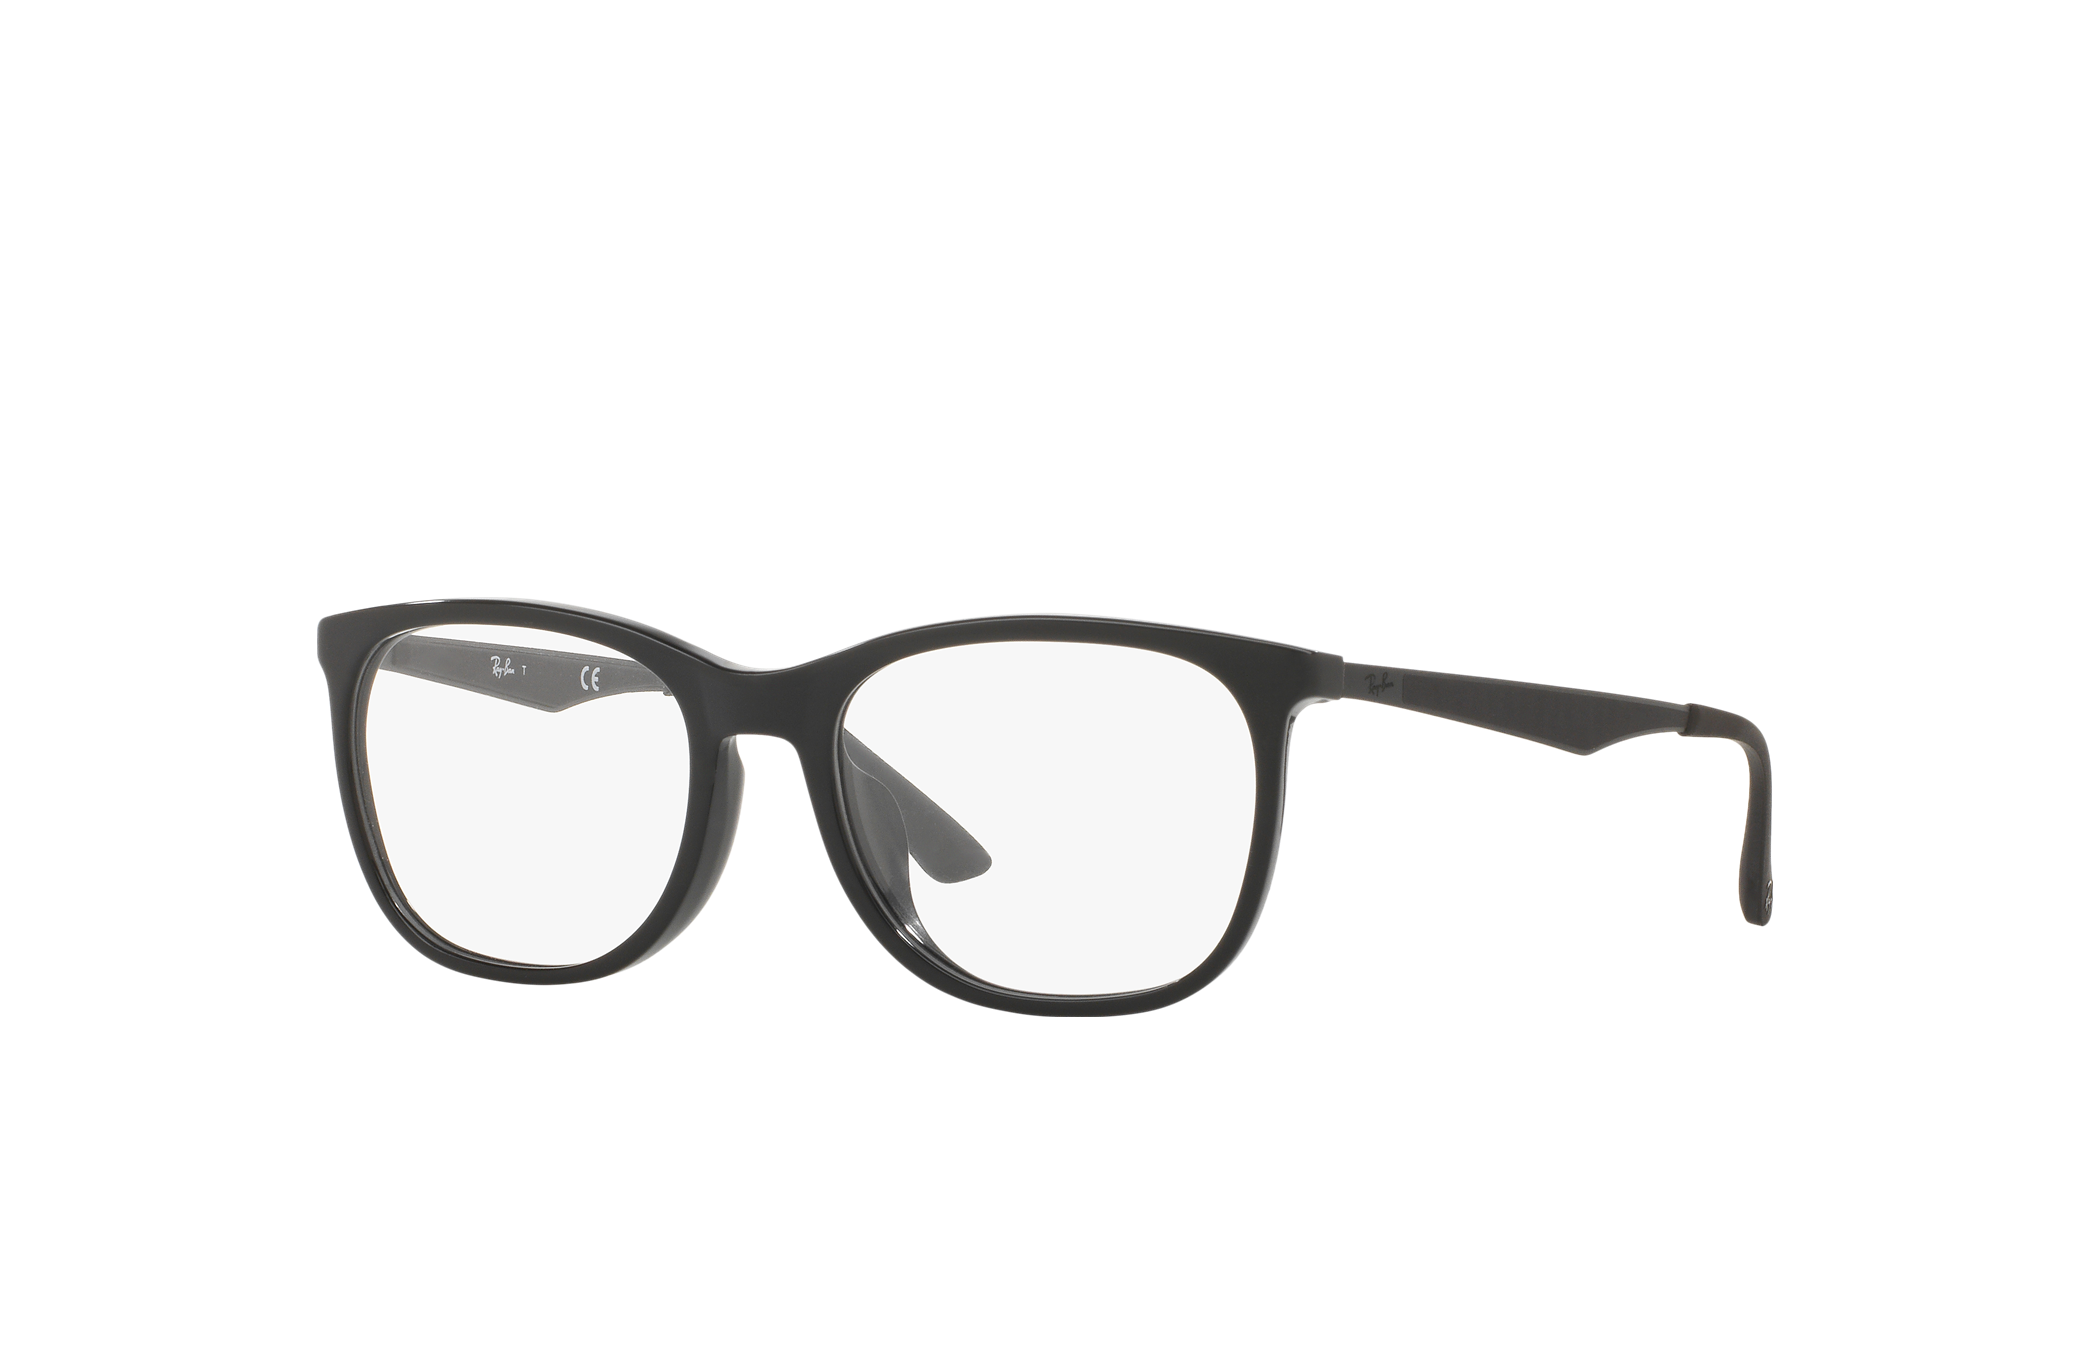 Rb7078f Eyeglasses with Black Frame - RB7078F | Ray-Ban®